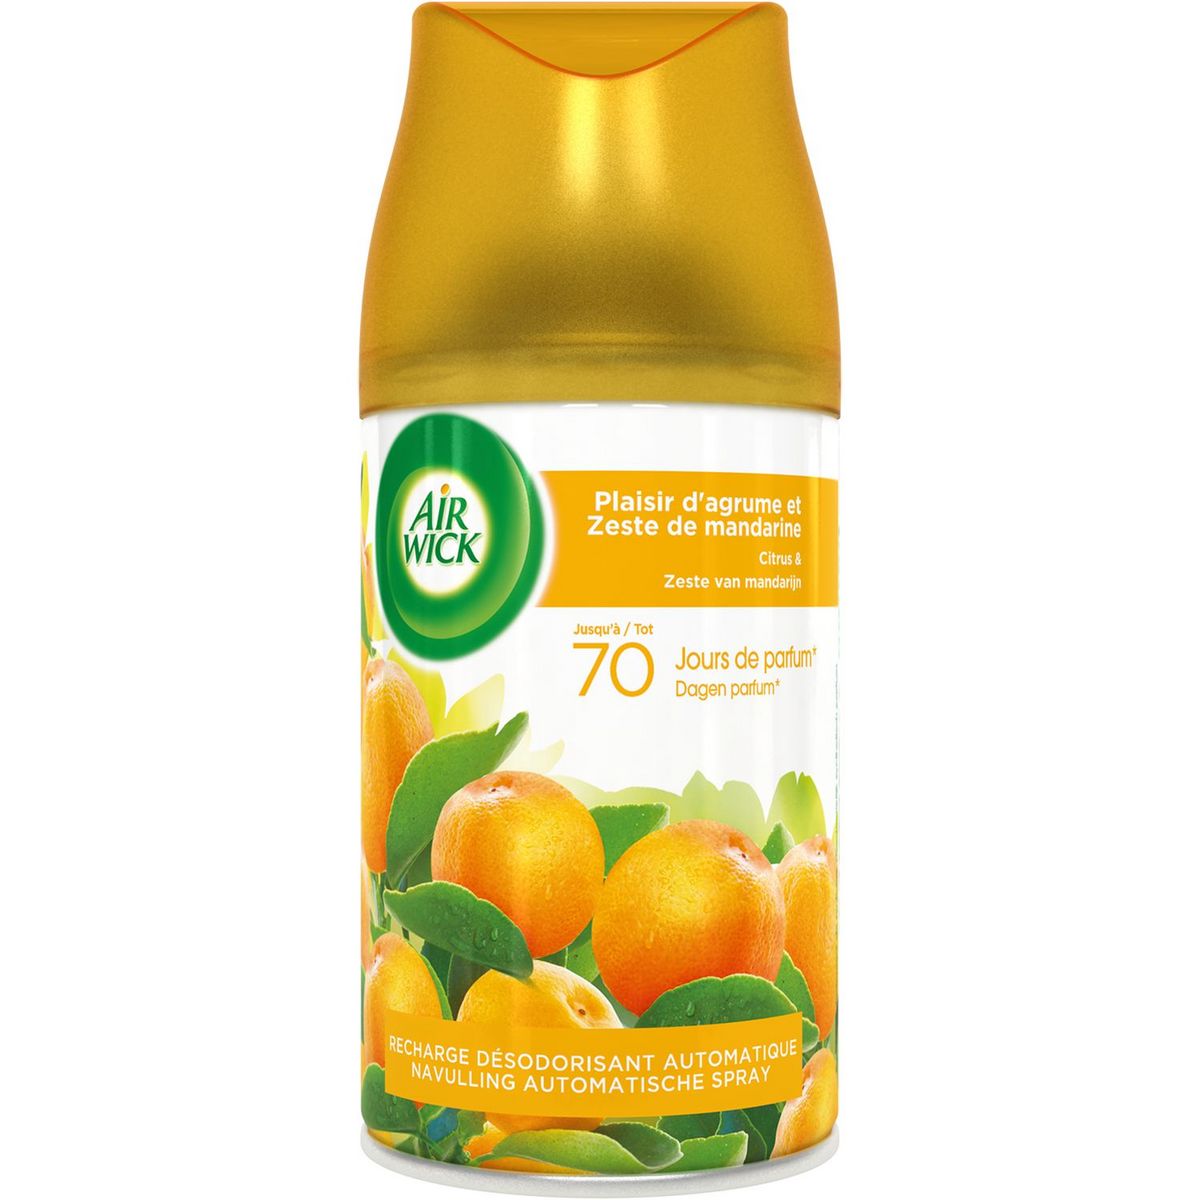 AIR WICK Freshmatic recharge désodorisant agrume et mandarine 250ml